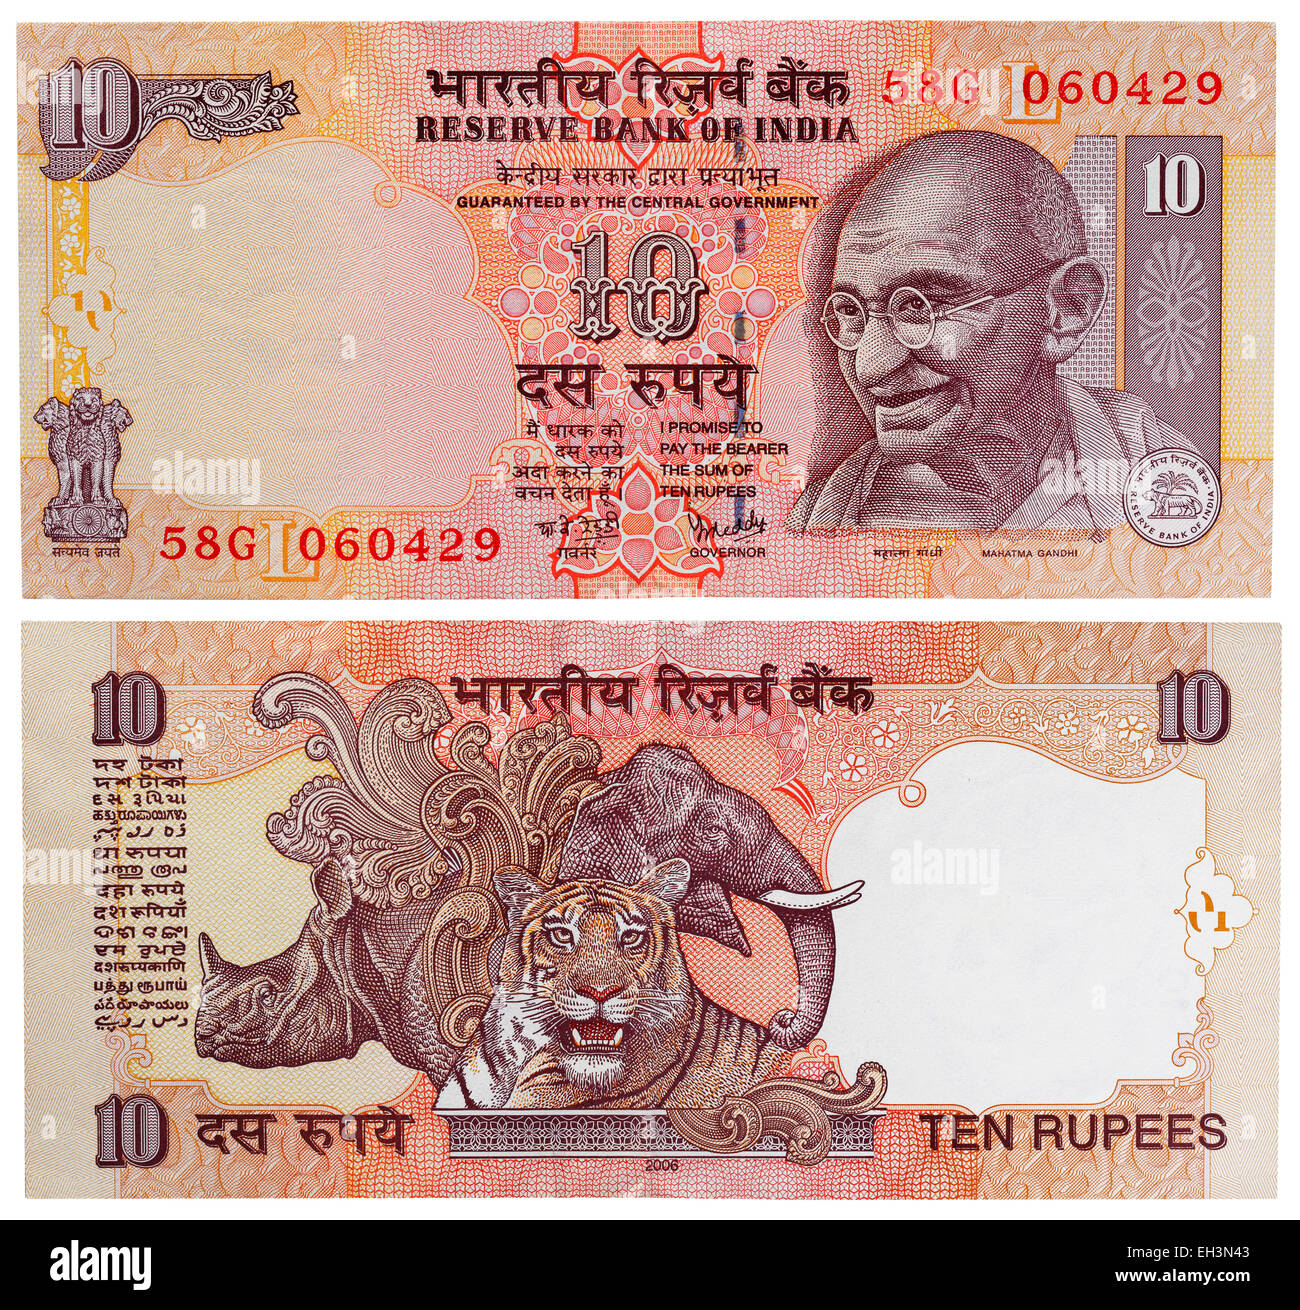 10 rupees banknote, Mahatma Gandhi, India, 2006 Stock Photo